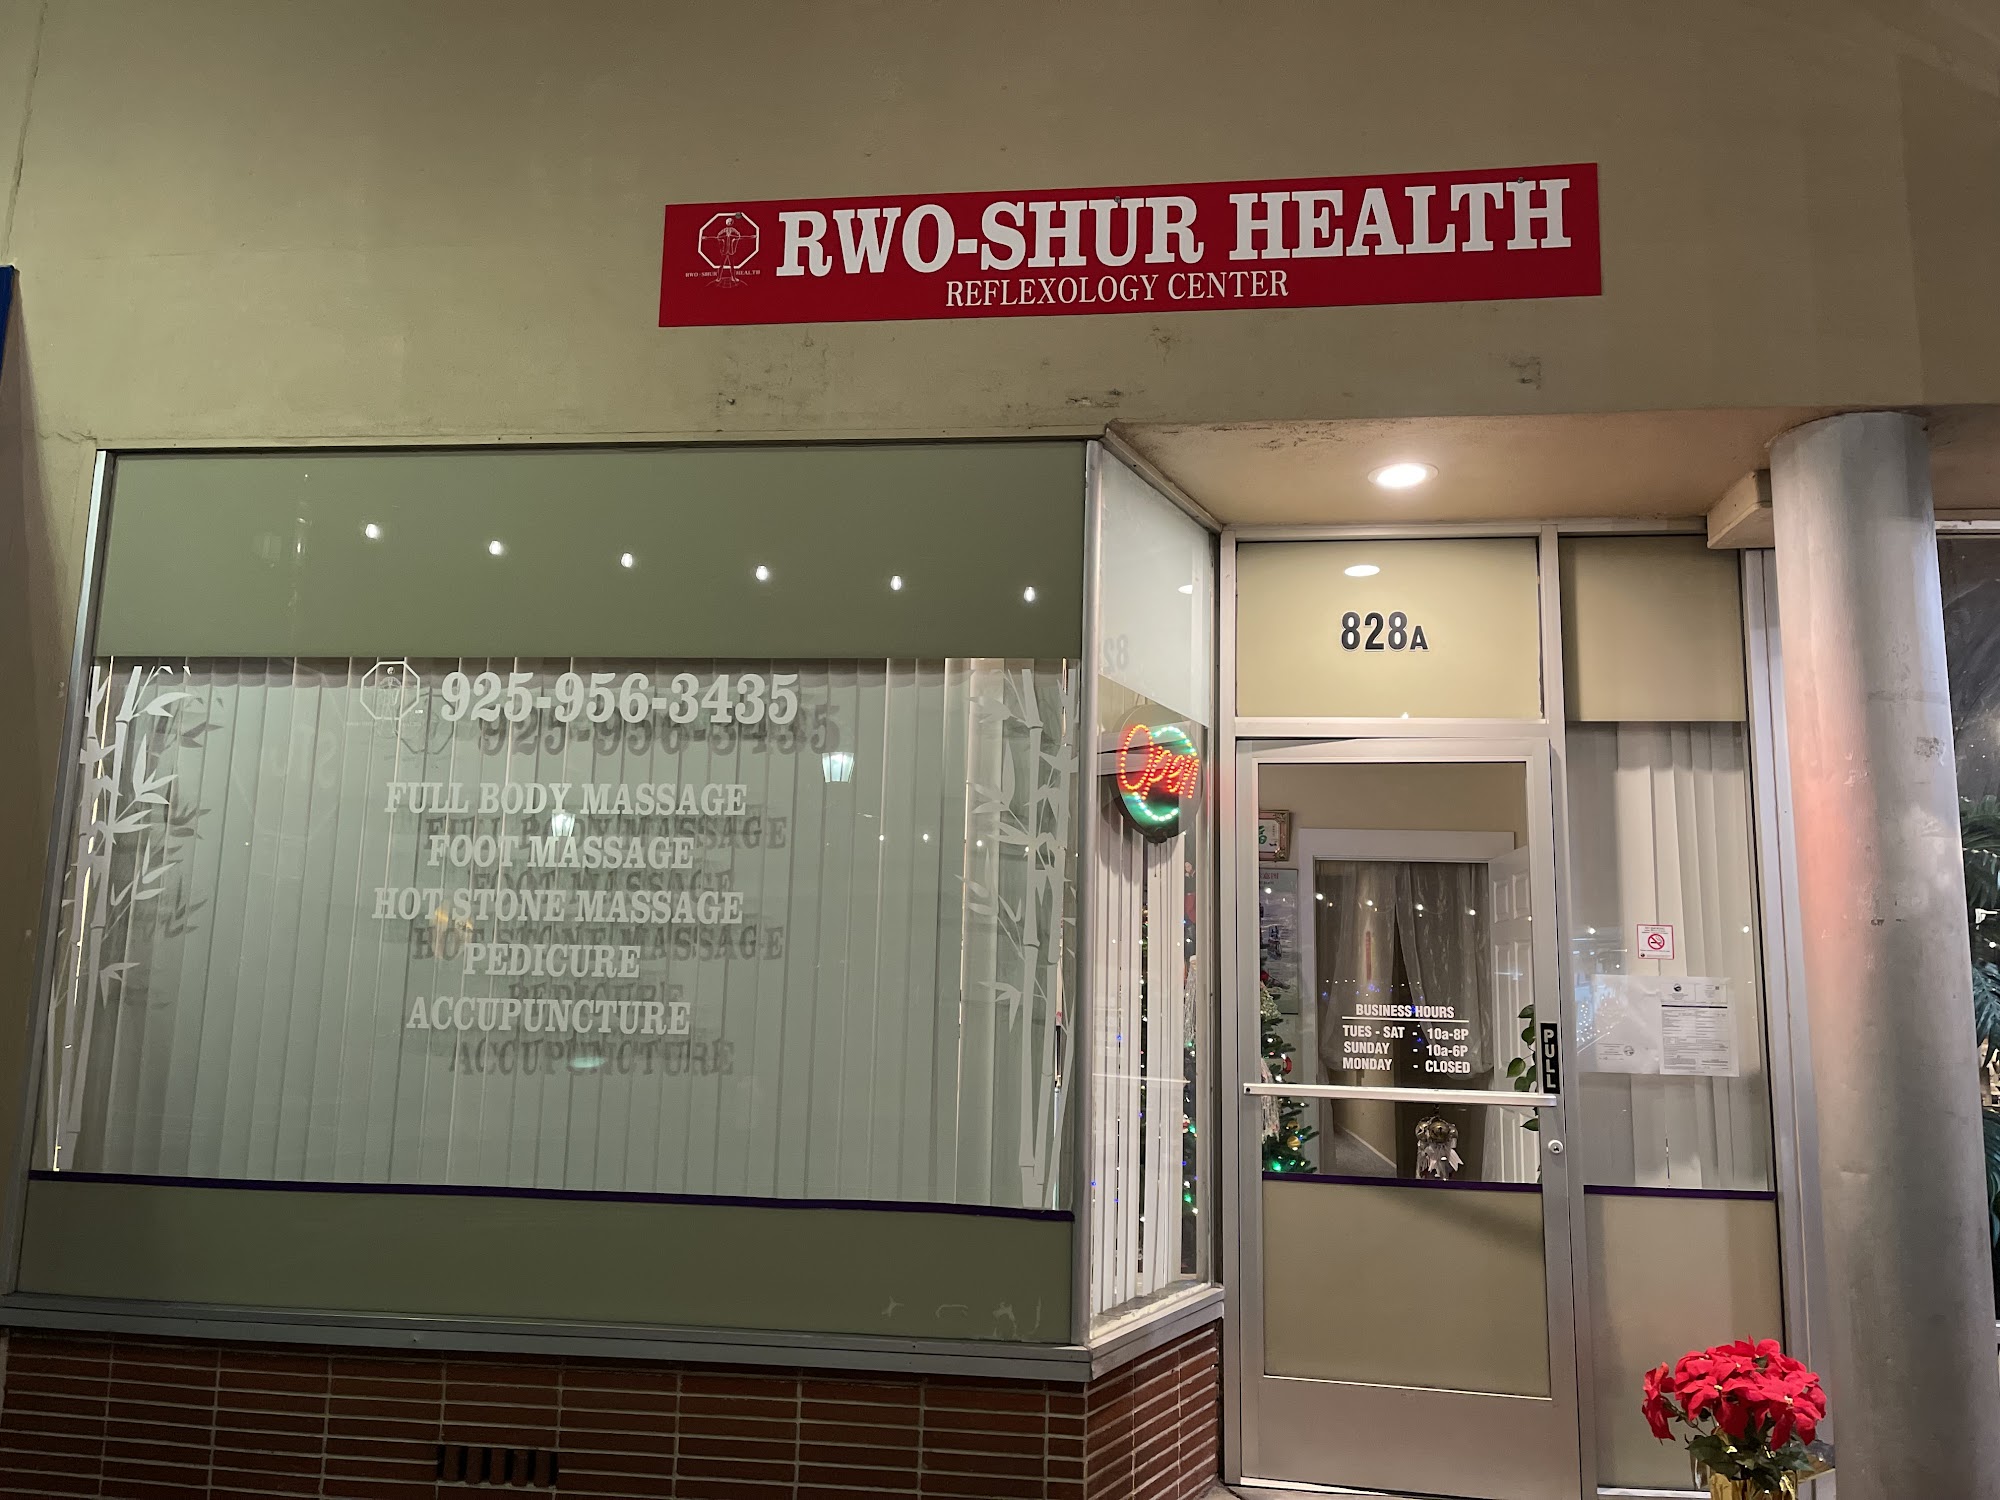 RWO-SHUR HEALTH